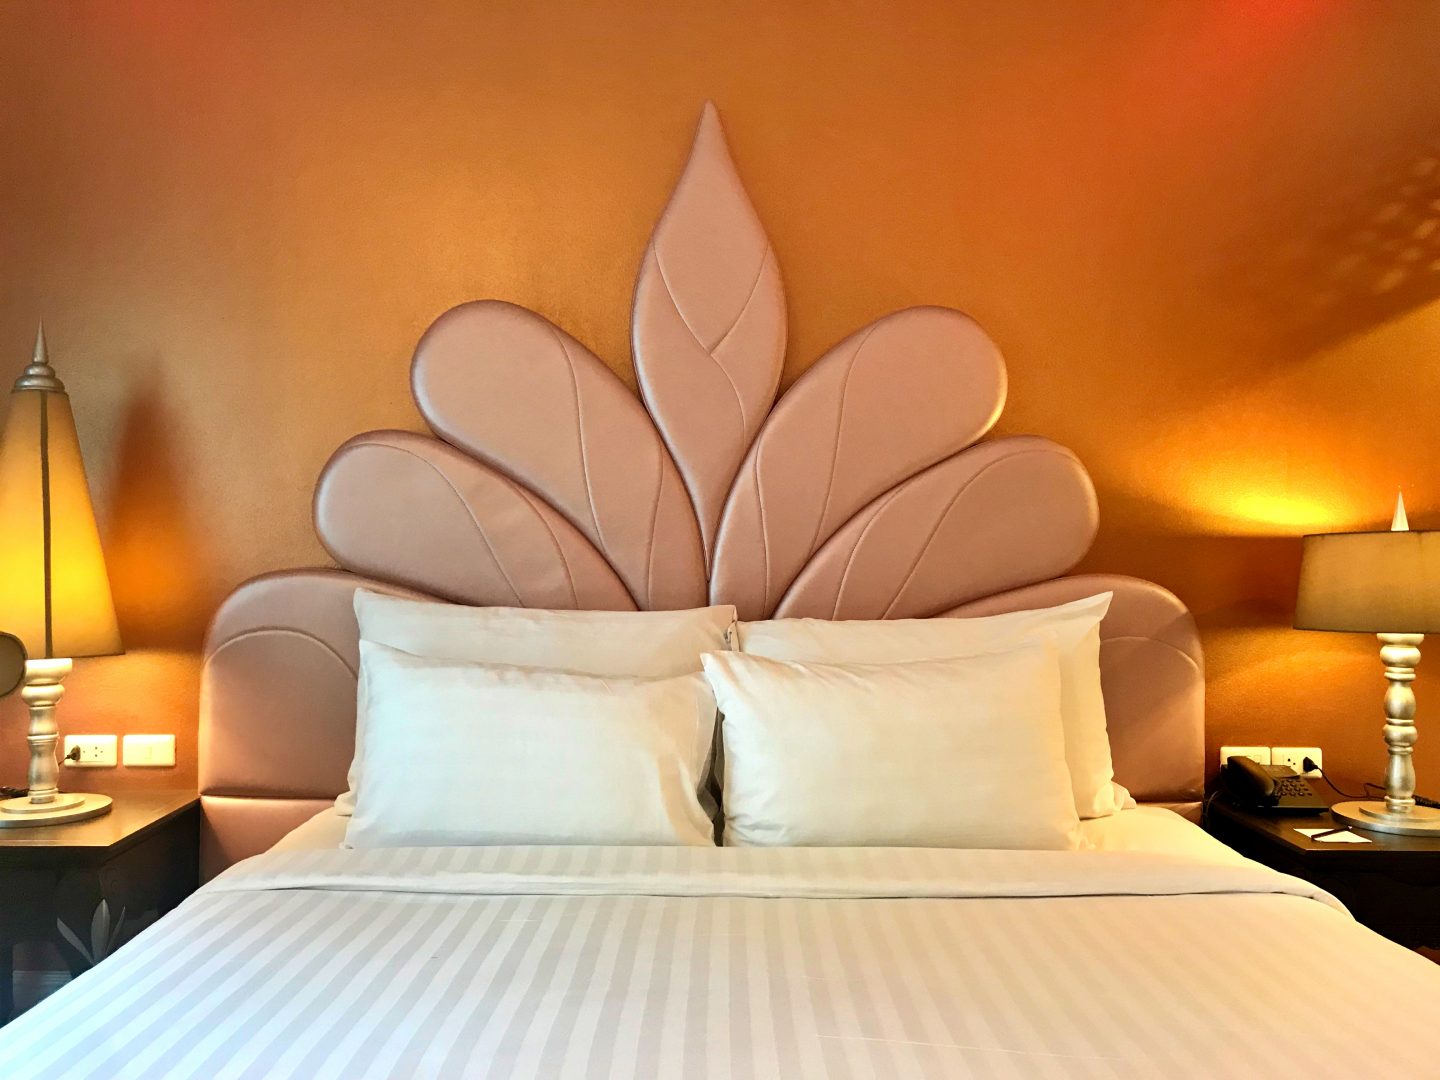 Romantik Hotel Chillax Resort - Hotel Review | www.dearlicious.com